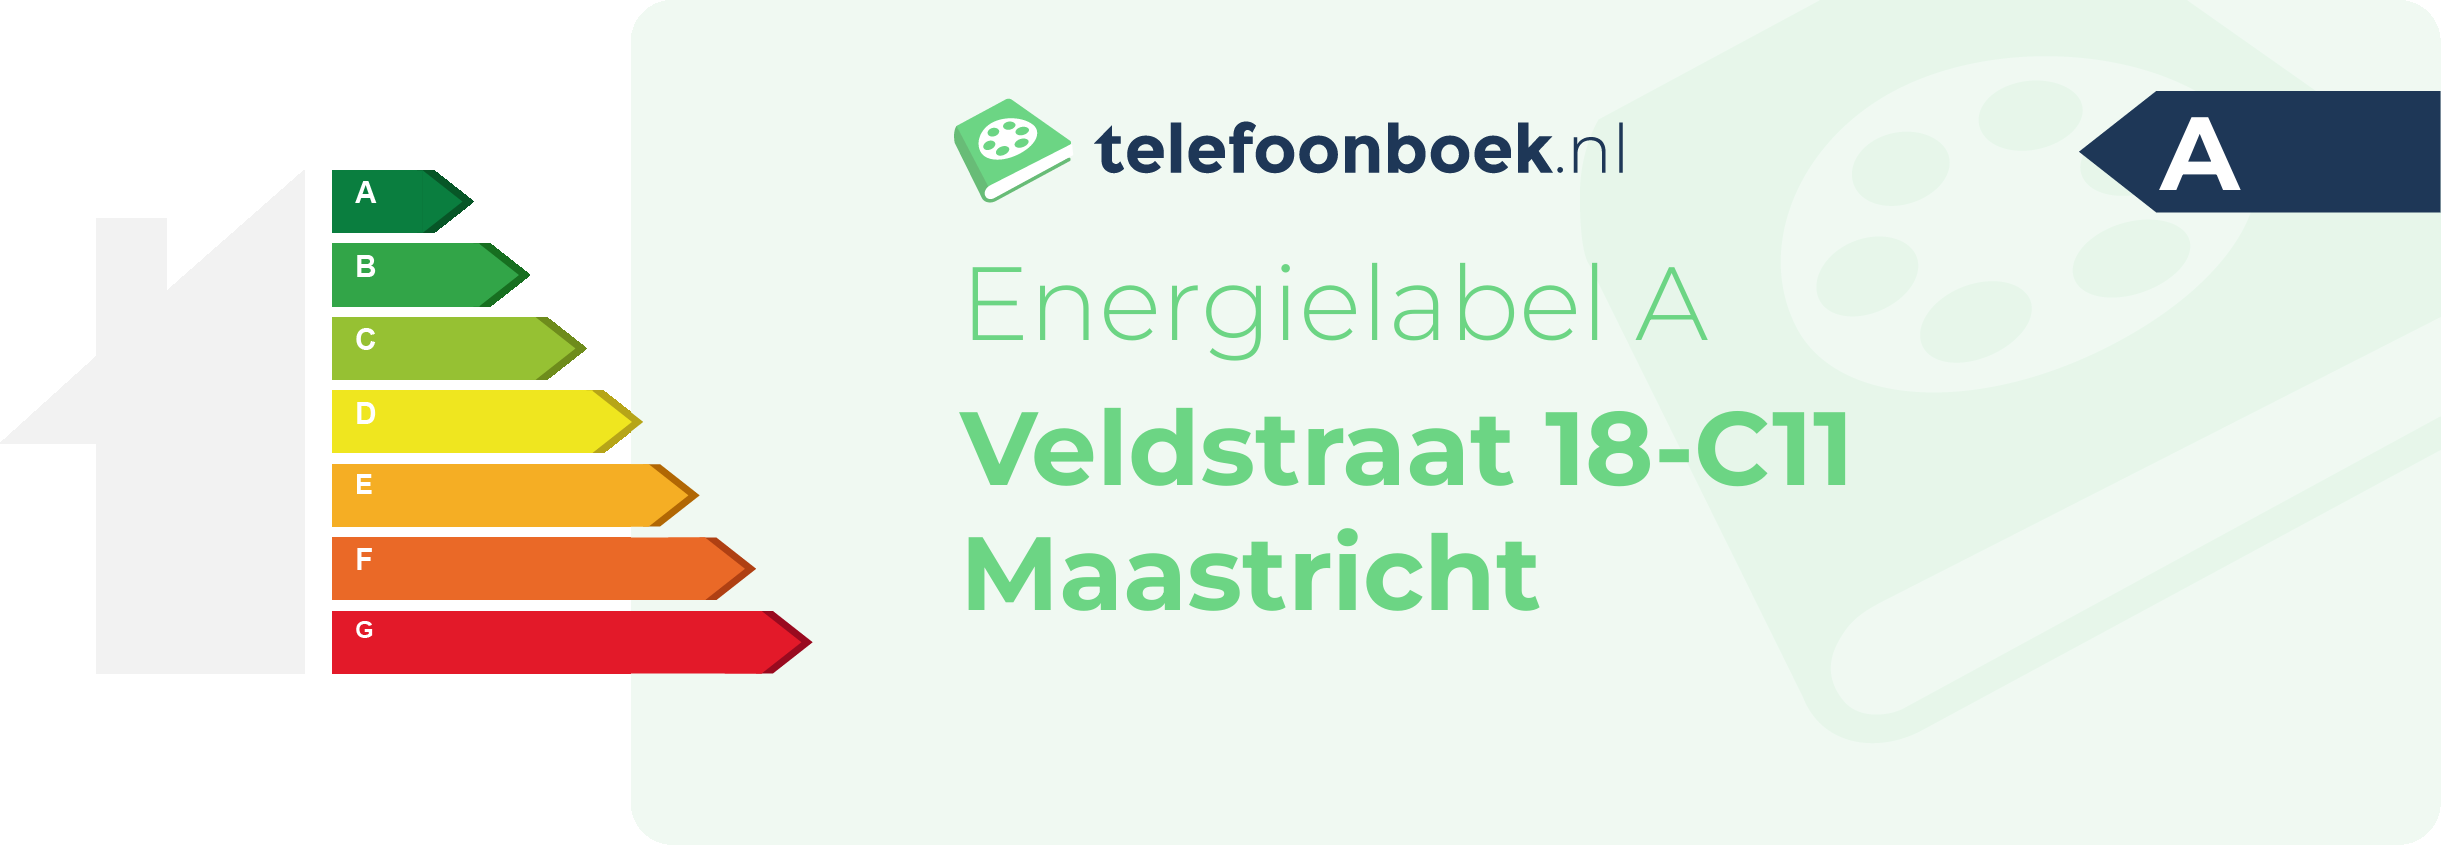 Energielabel Veldstraat 18-C11 Maastricht